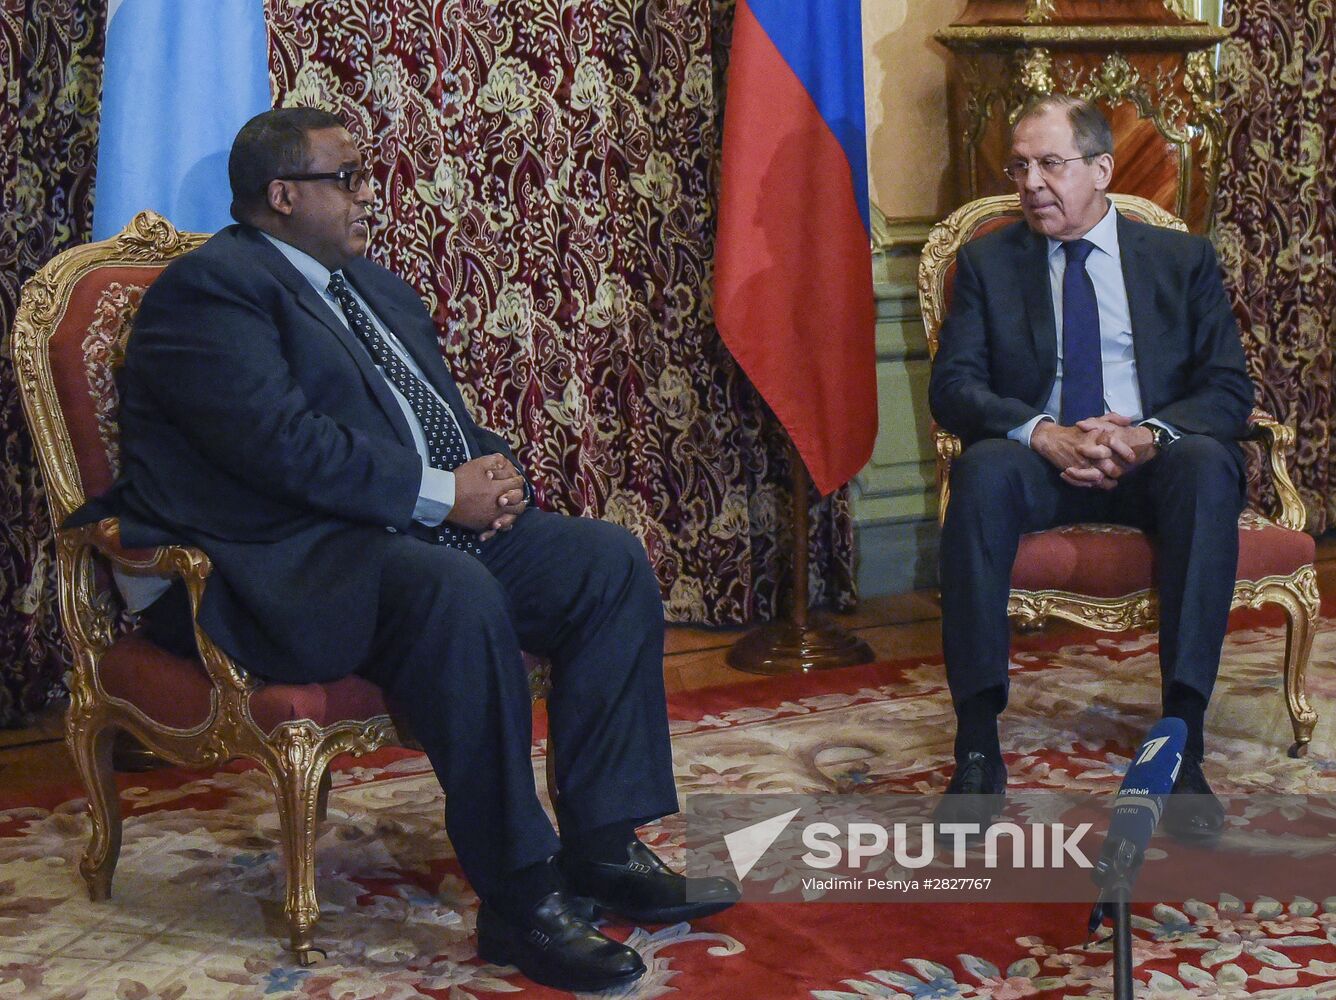 Russian Foreign Minister Sergey Lavrov meets with Somalia Prime Minister Omar Abdirashid Ali Sharmarke